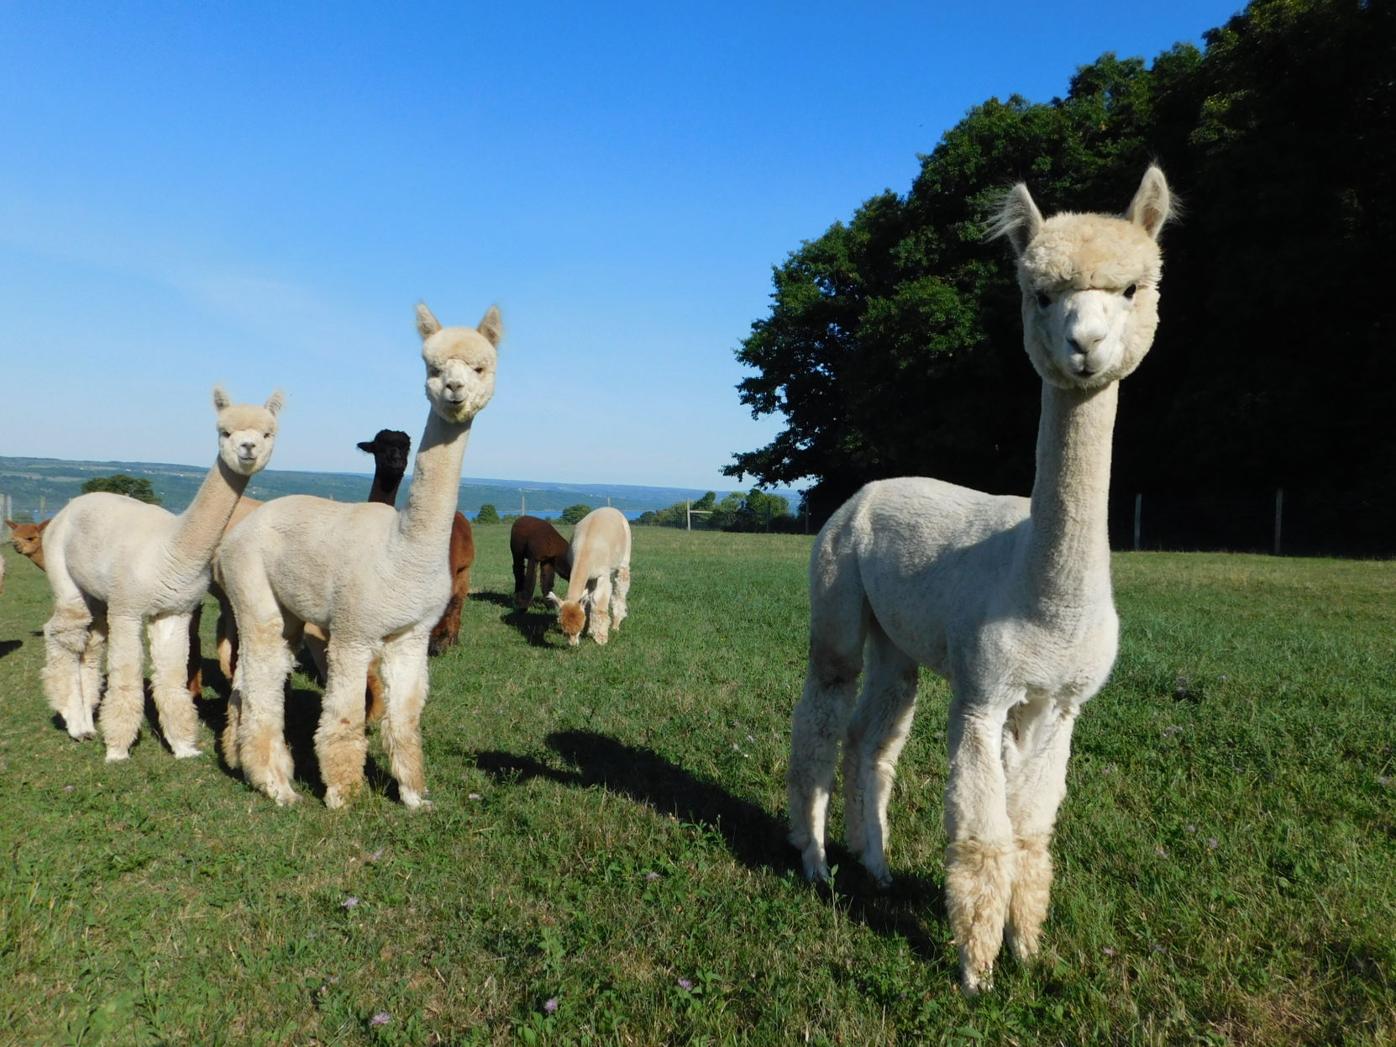 Alpaca Vs Lambs Wool, Best Alpaca Products